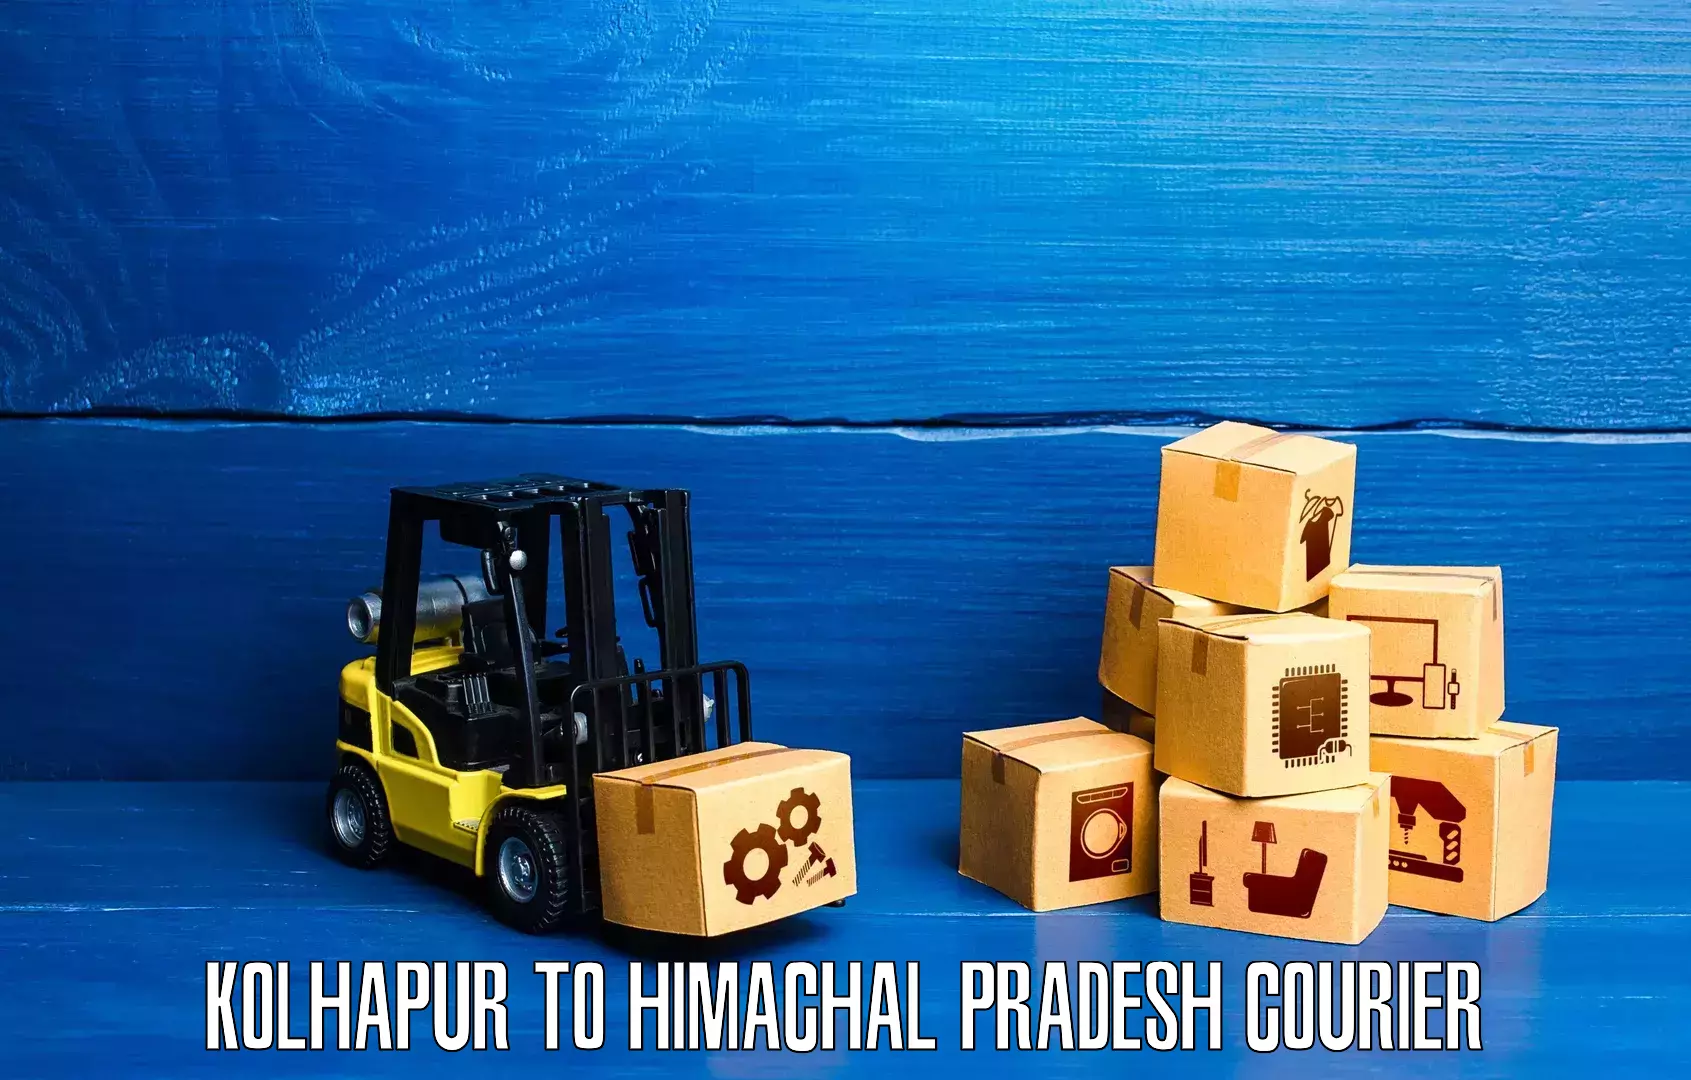 24-hour courier service Kolhapur to Nalagarh